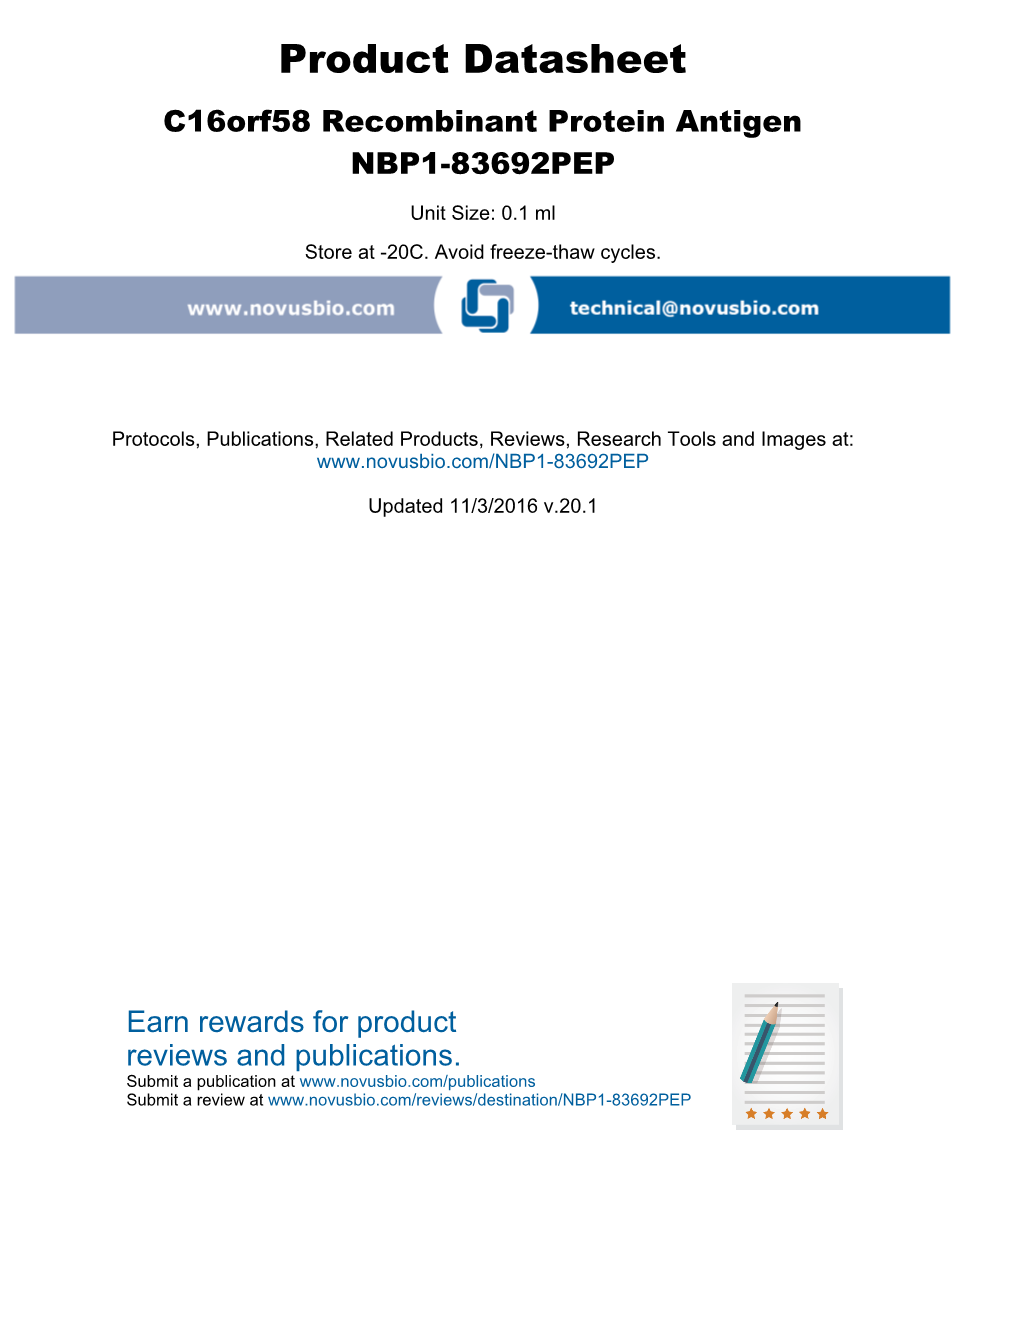 Product Datasheet C16orf58 Recombinant Protein Antigen NBP1